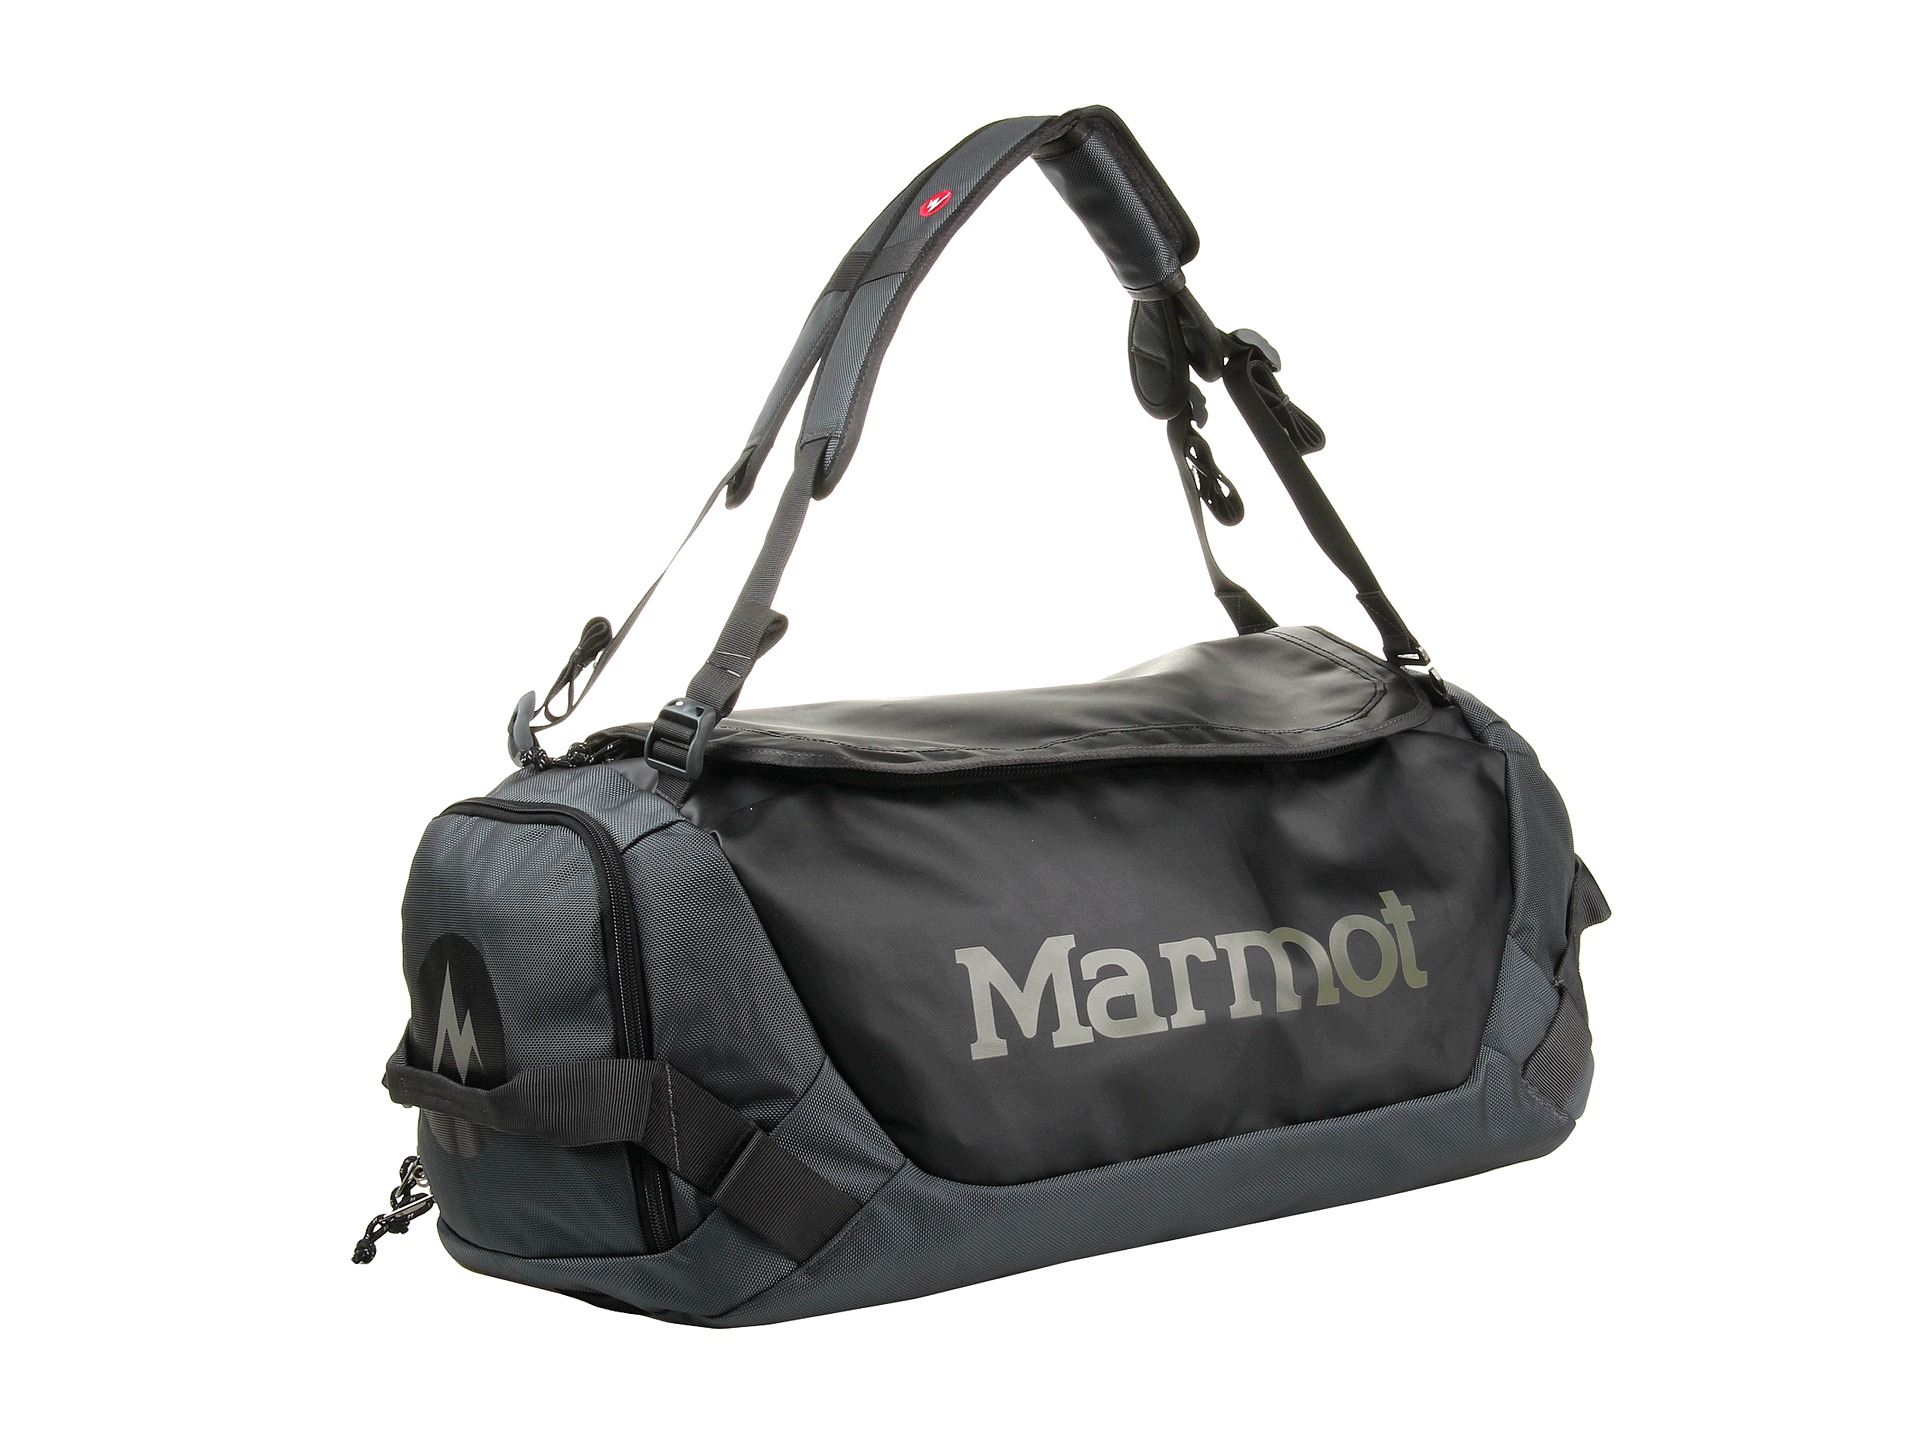 Marmot Long Hauler Duffle Bag Medium | Shipped Free at Zappos